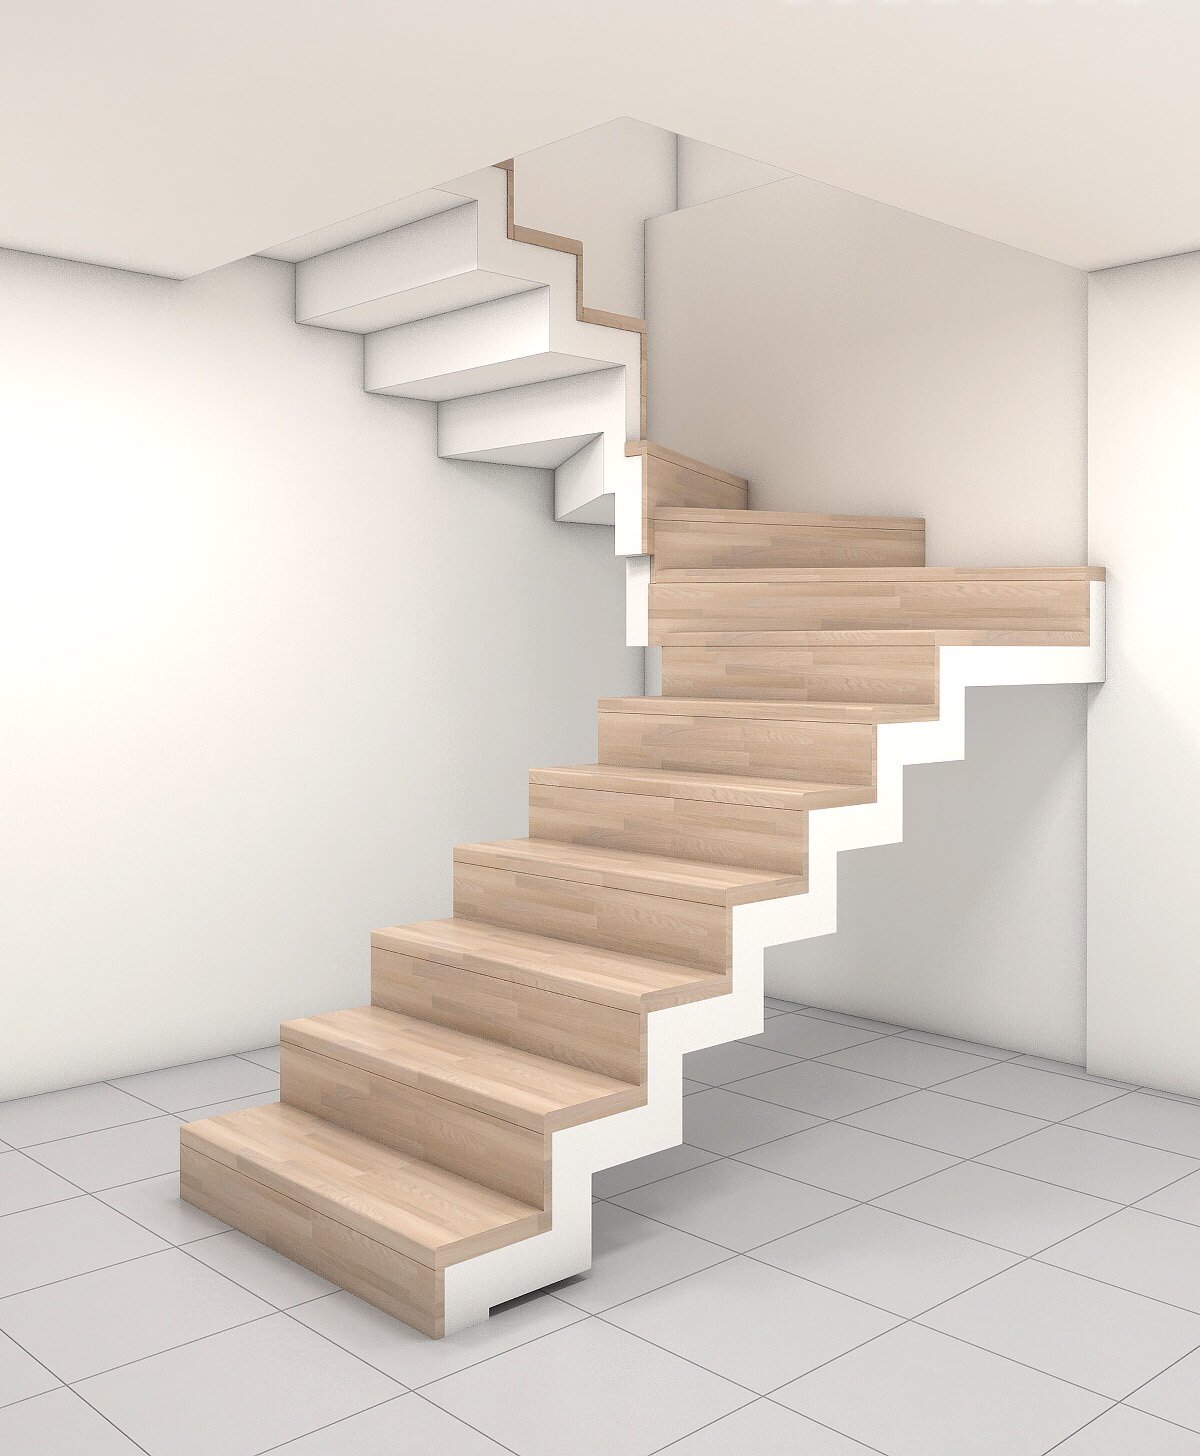 См лестниц. Лестница с забежными ступенями на 180 монолит. Лестница с 3 забежными ступенями. Забежная лестница монолит. Лестница с забежными ступенями монолит.